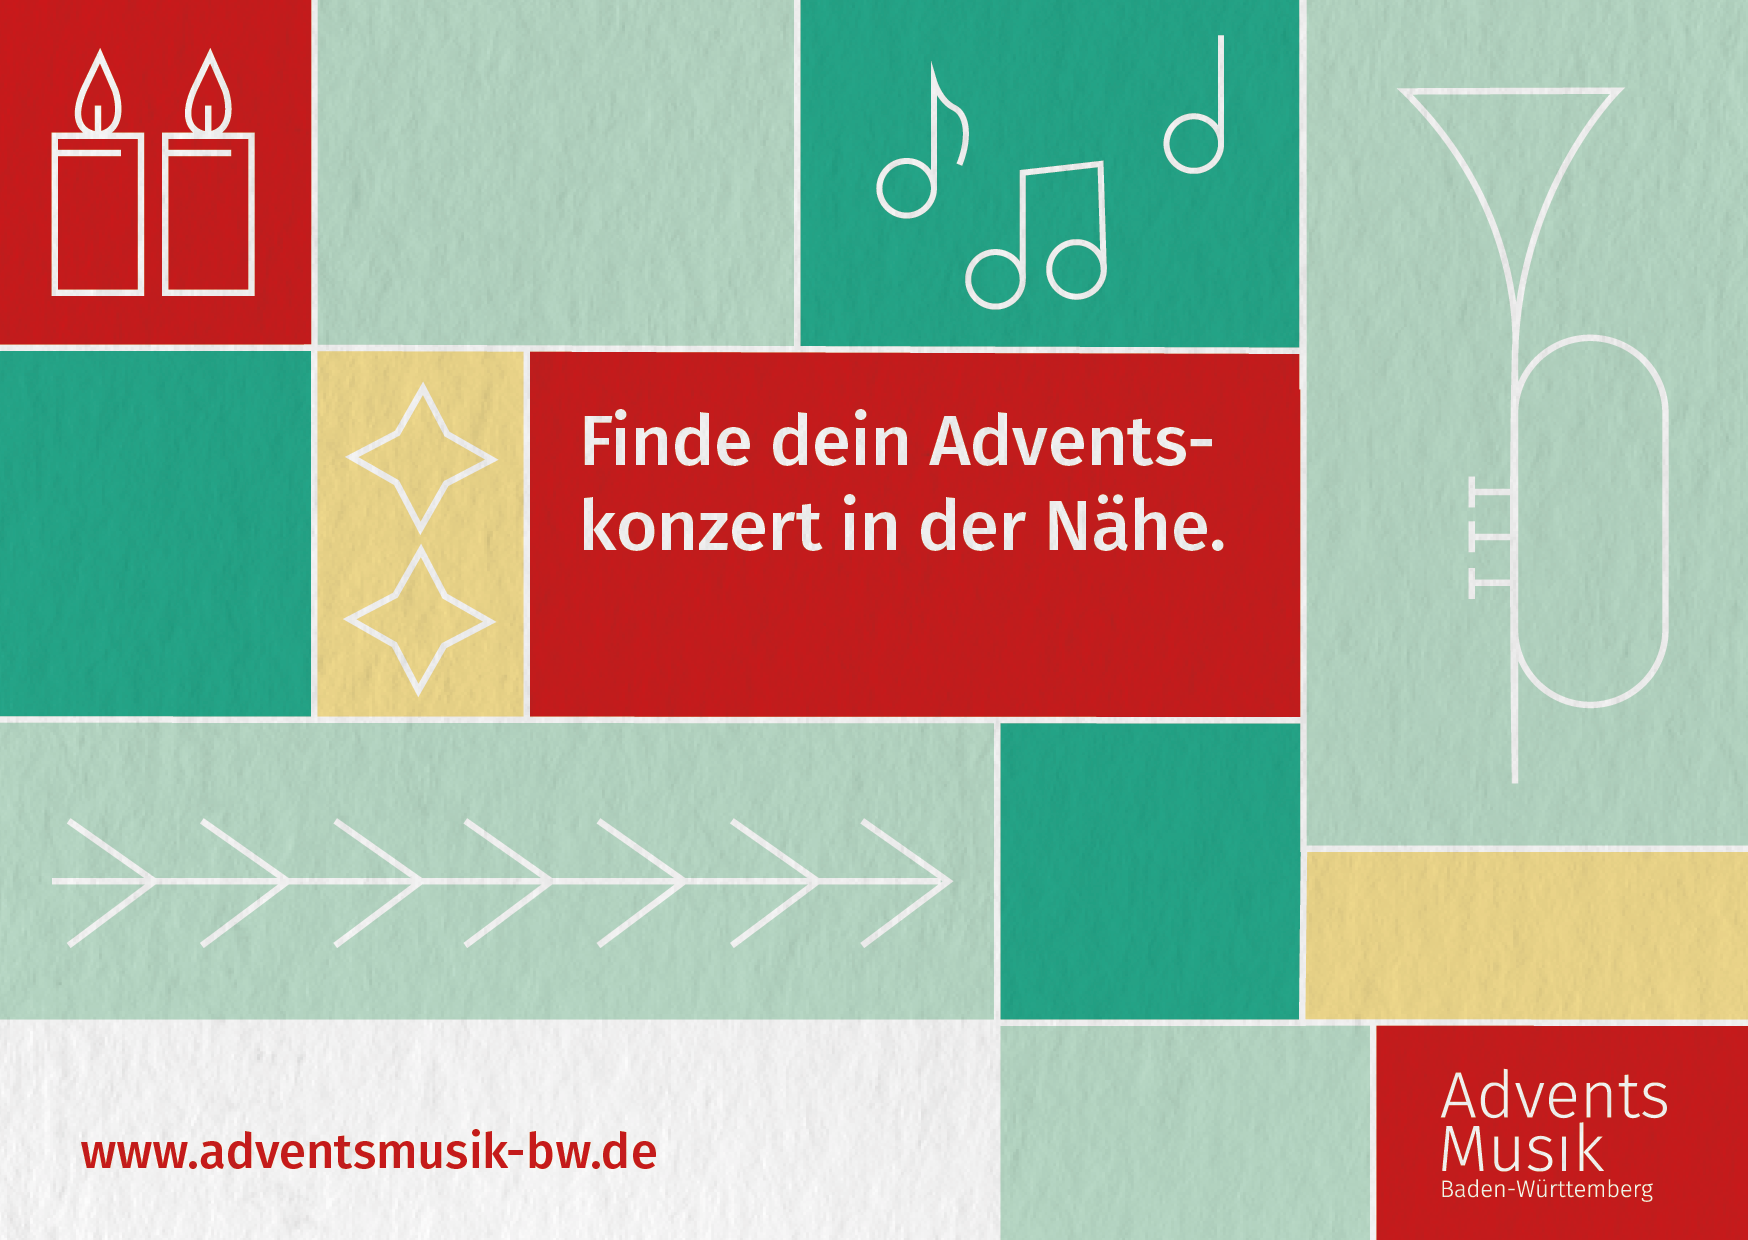 adventsmusik-bw.de